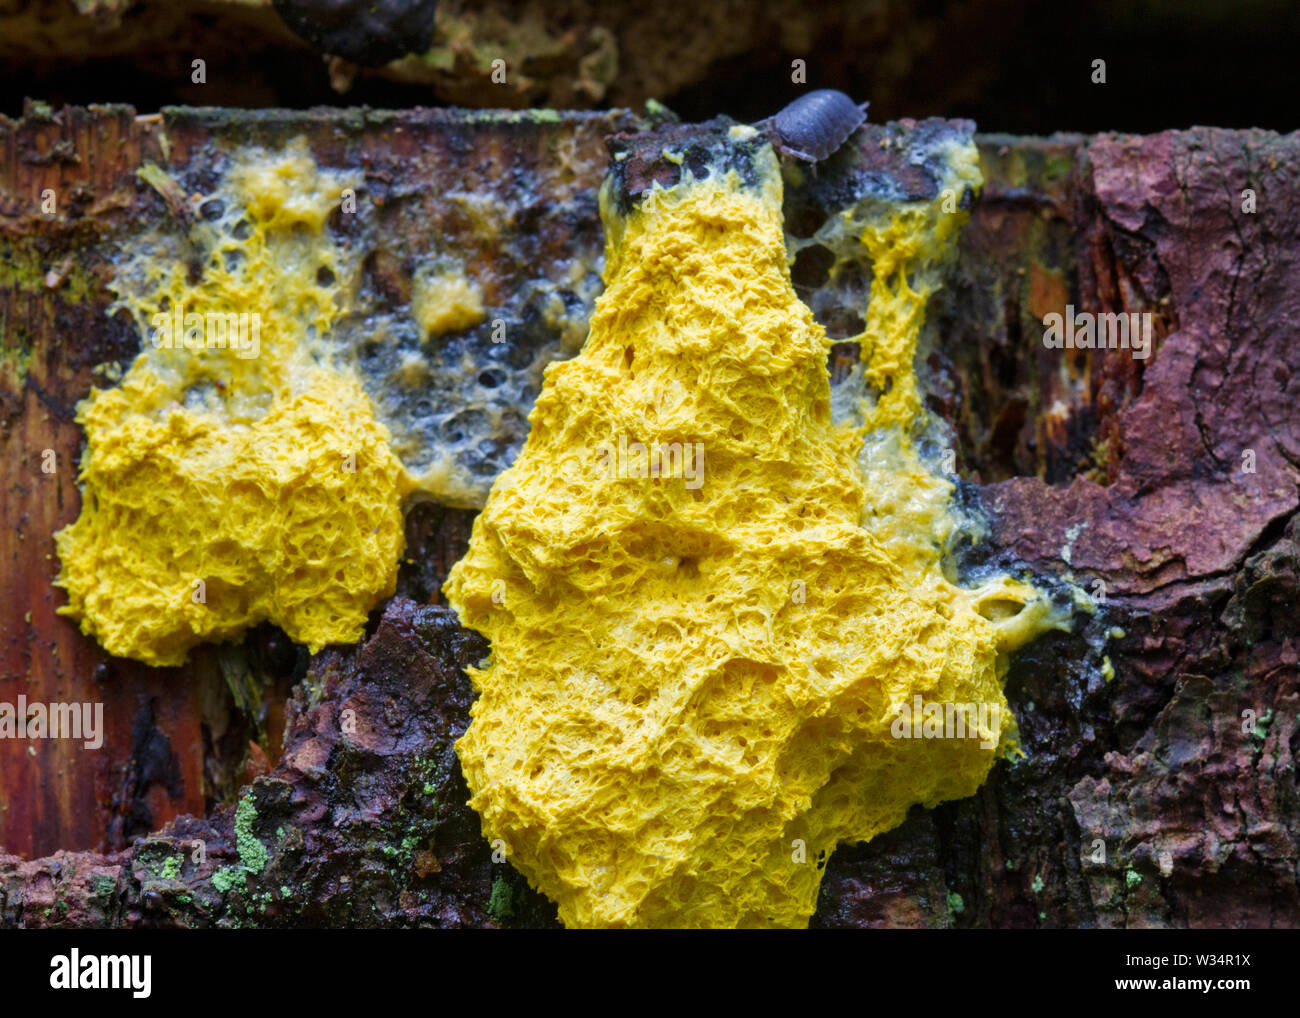 Common rough woodlouse eating Scrambled egg slime, a yellow slime mold. Stock Photo